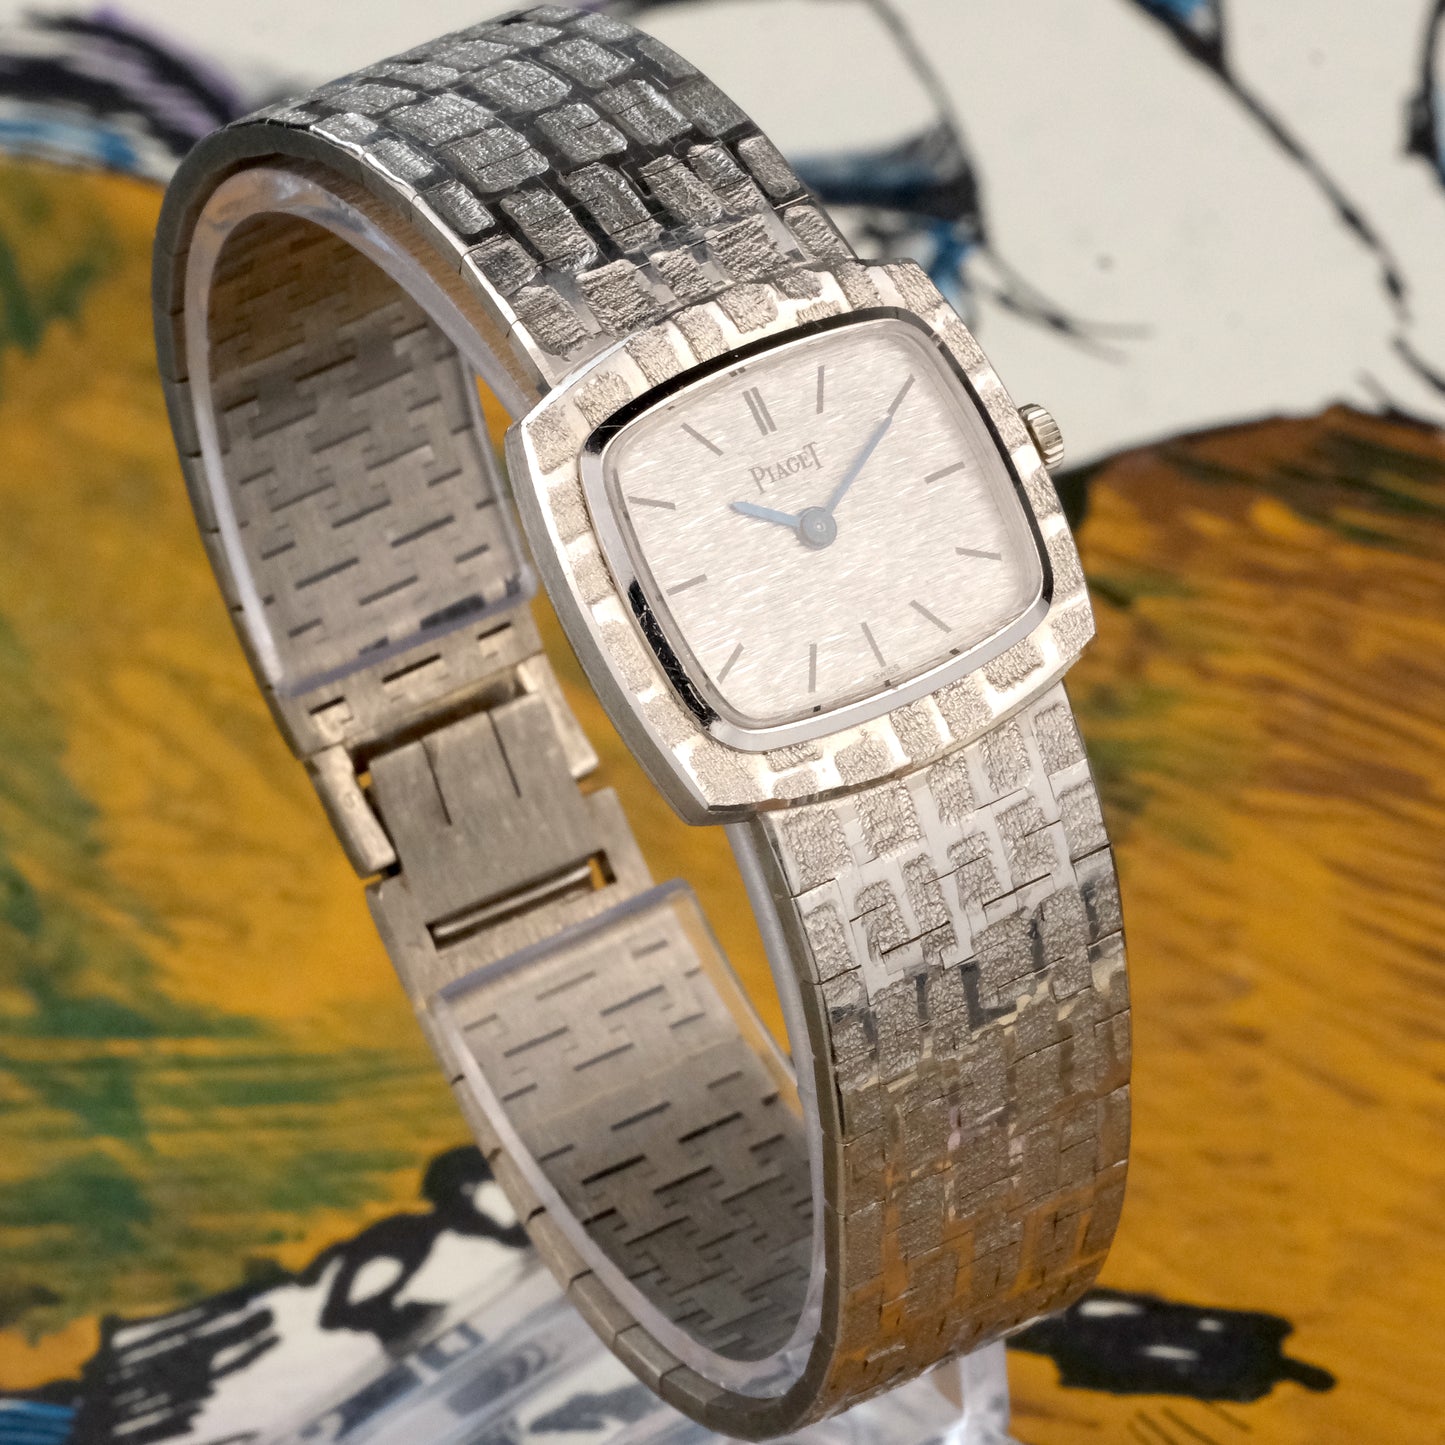 Piaget 1960's Manual Wind Brick Bracelet Watch 18K White Gold 9561A